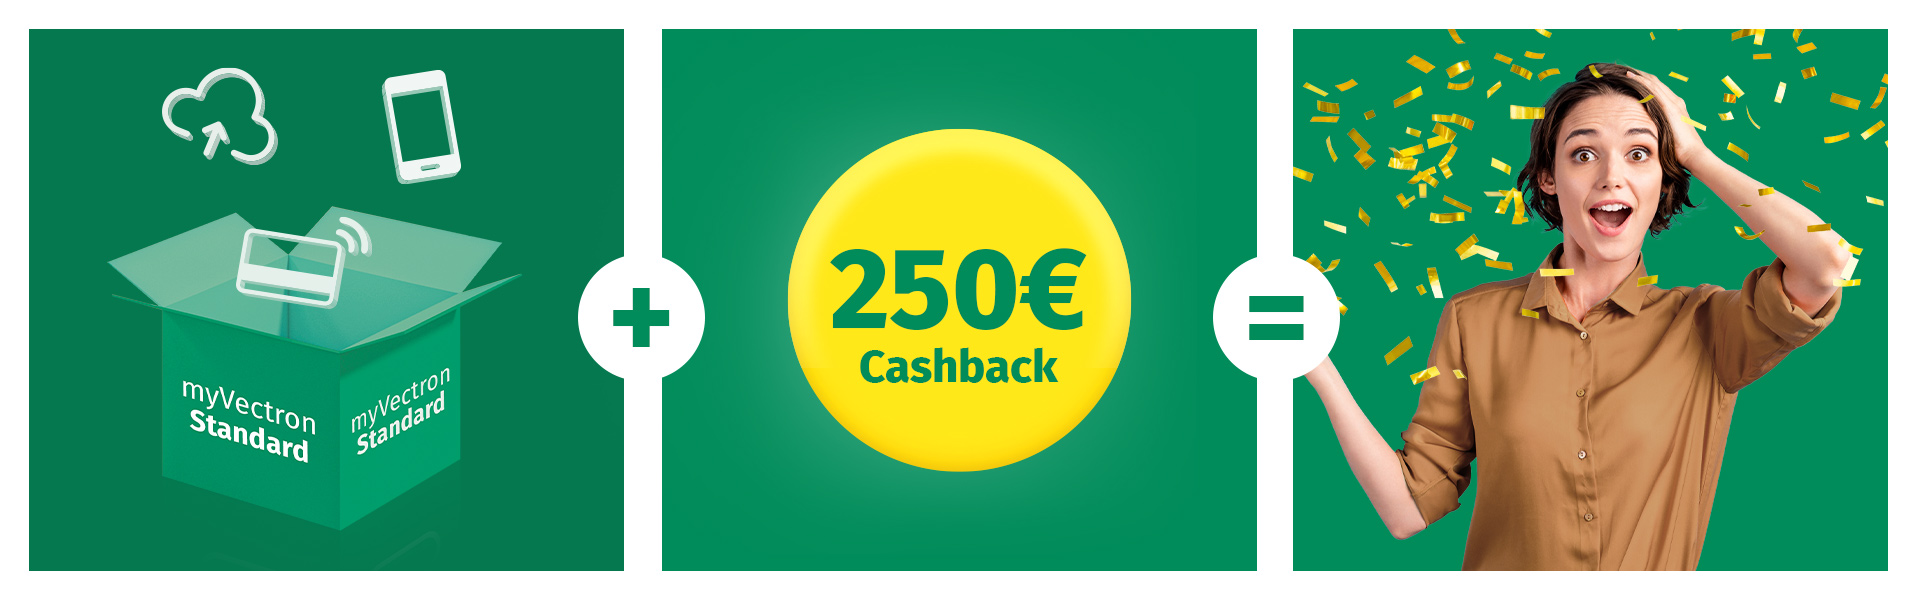 Cashback-Aktion Cashback 250